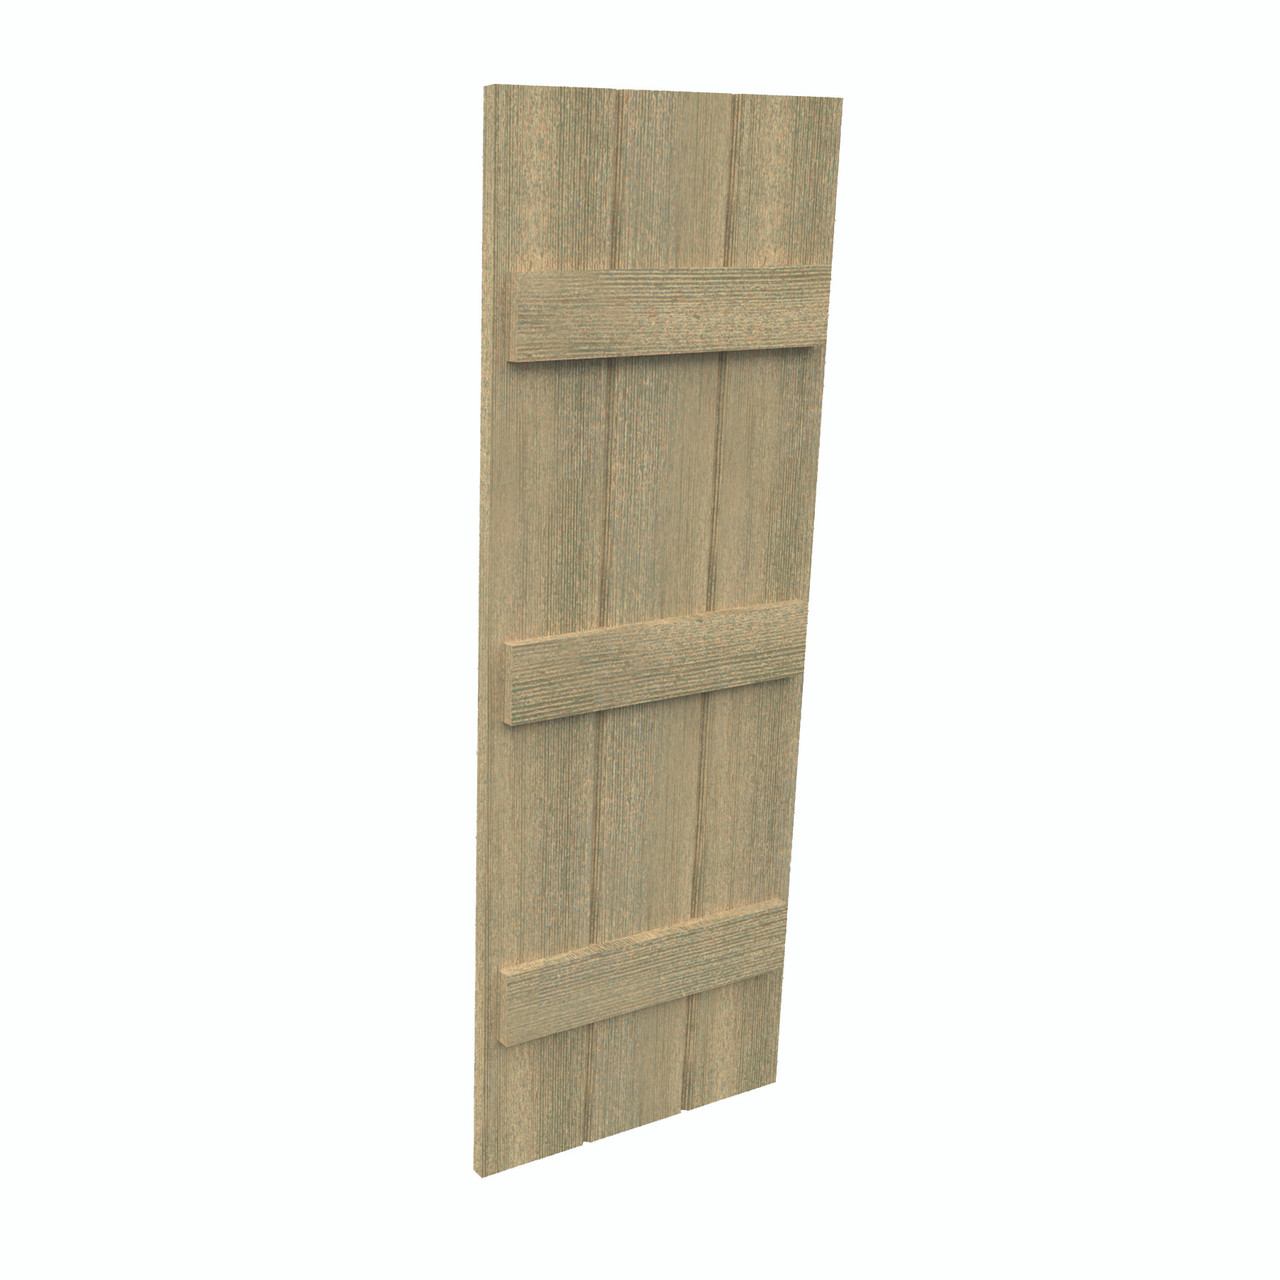 18 inch by 81 inch Plank Shutter with 3-Plank, 3-Batten